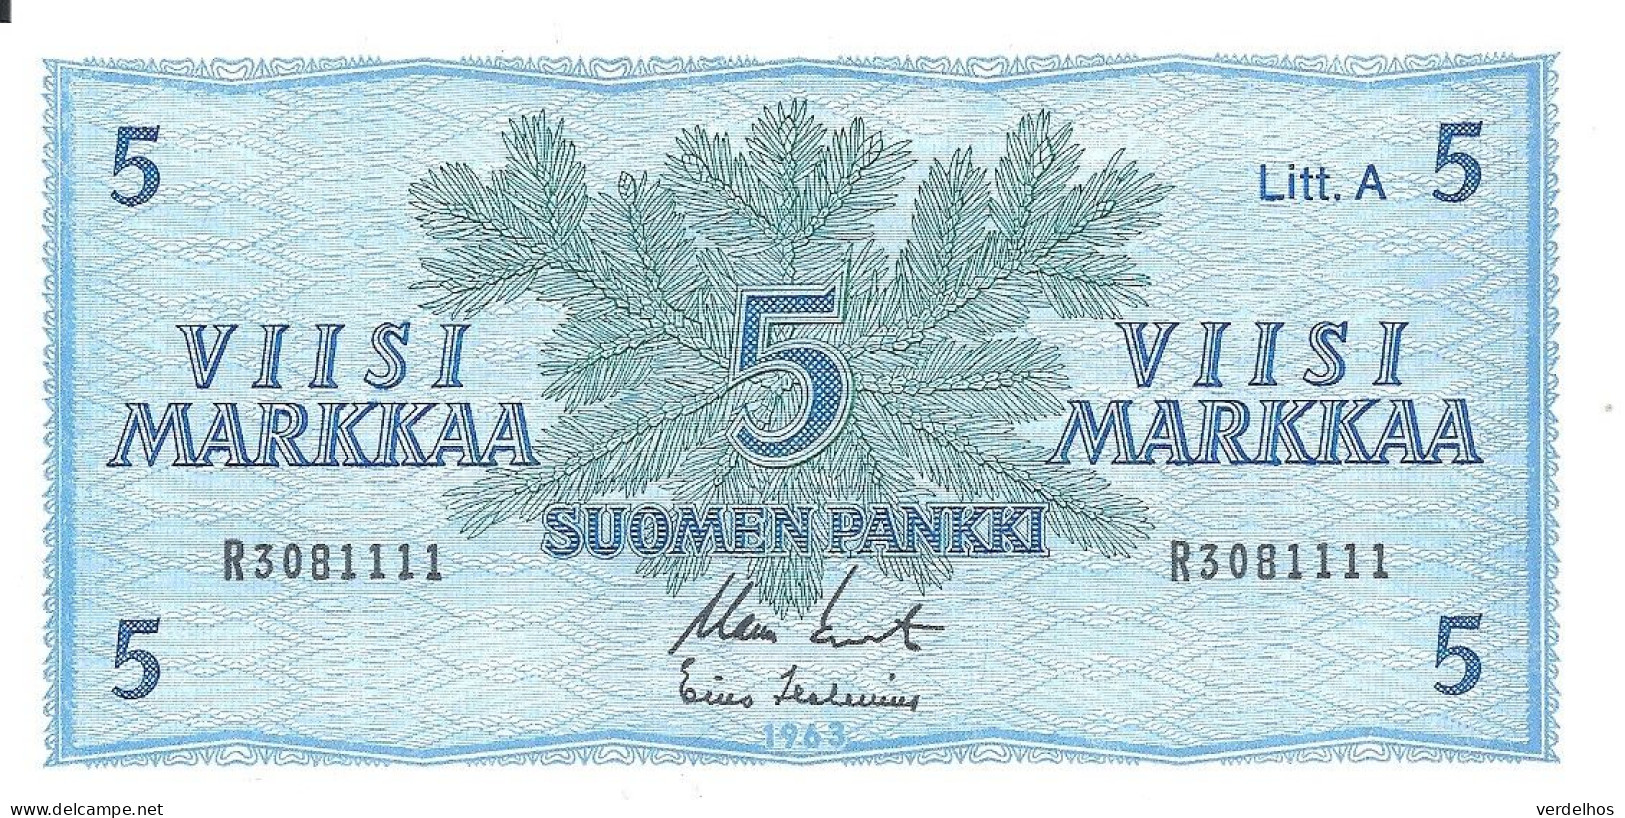 FINLANDE 5 MARKKA 1963 UNC P 103 - Finnland